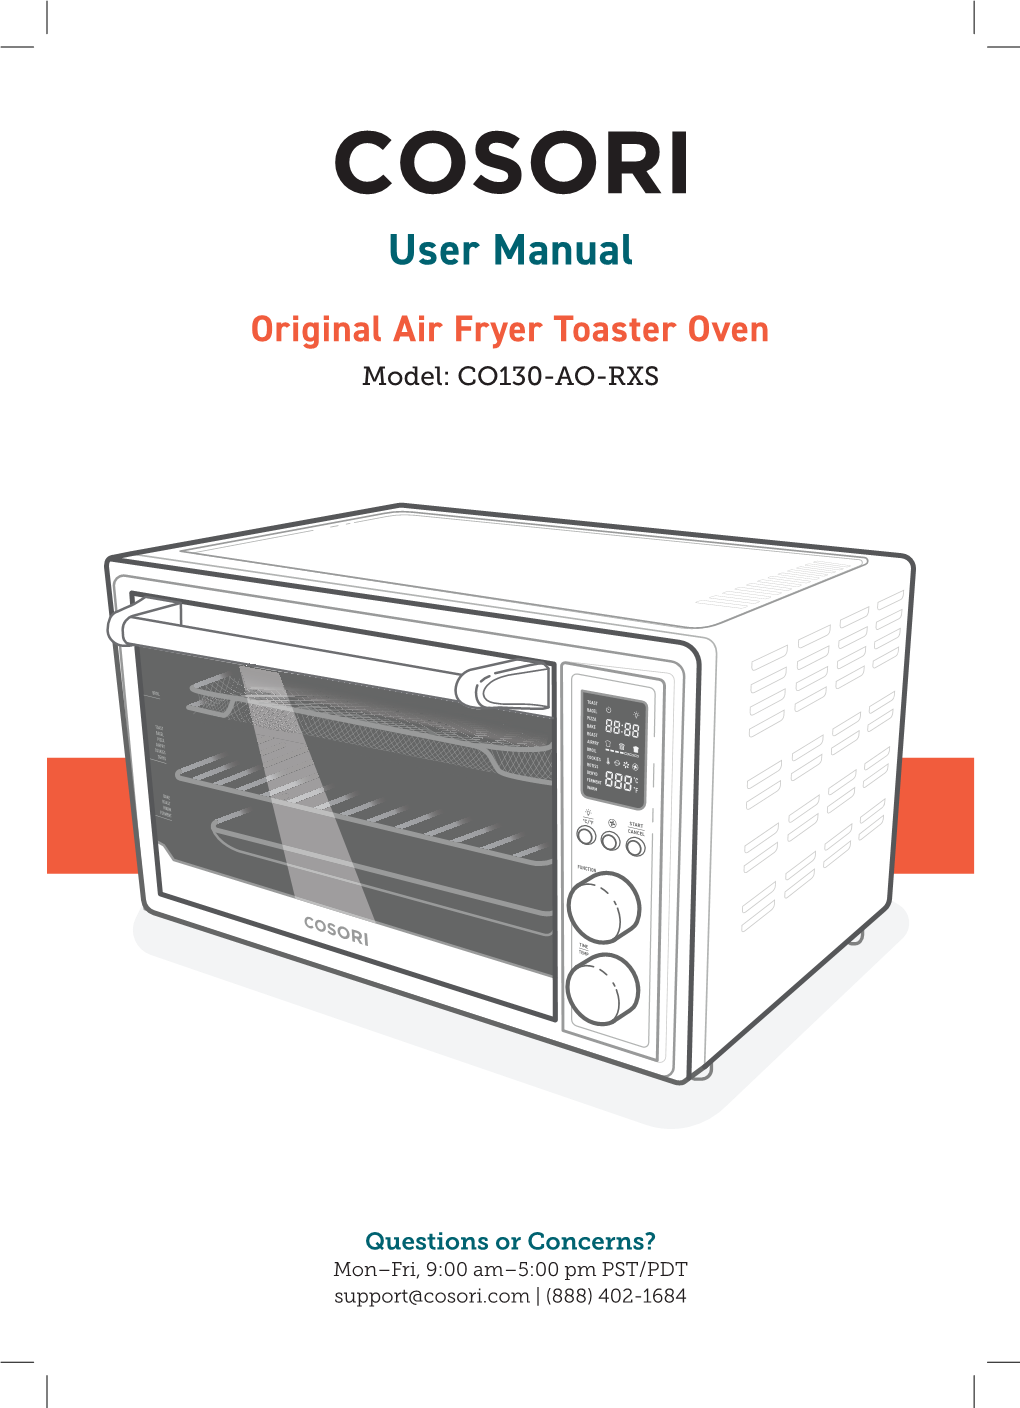 Original Air Fryer Toaster Oven User Manual